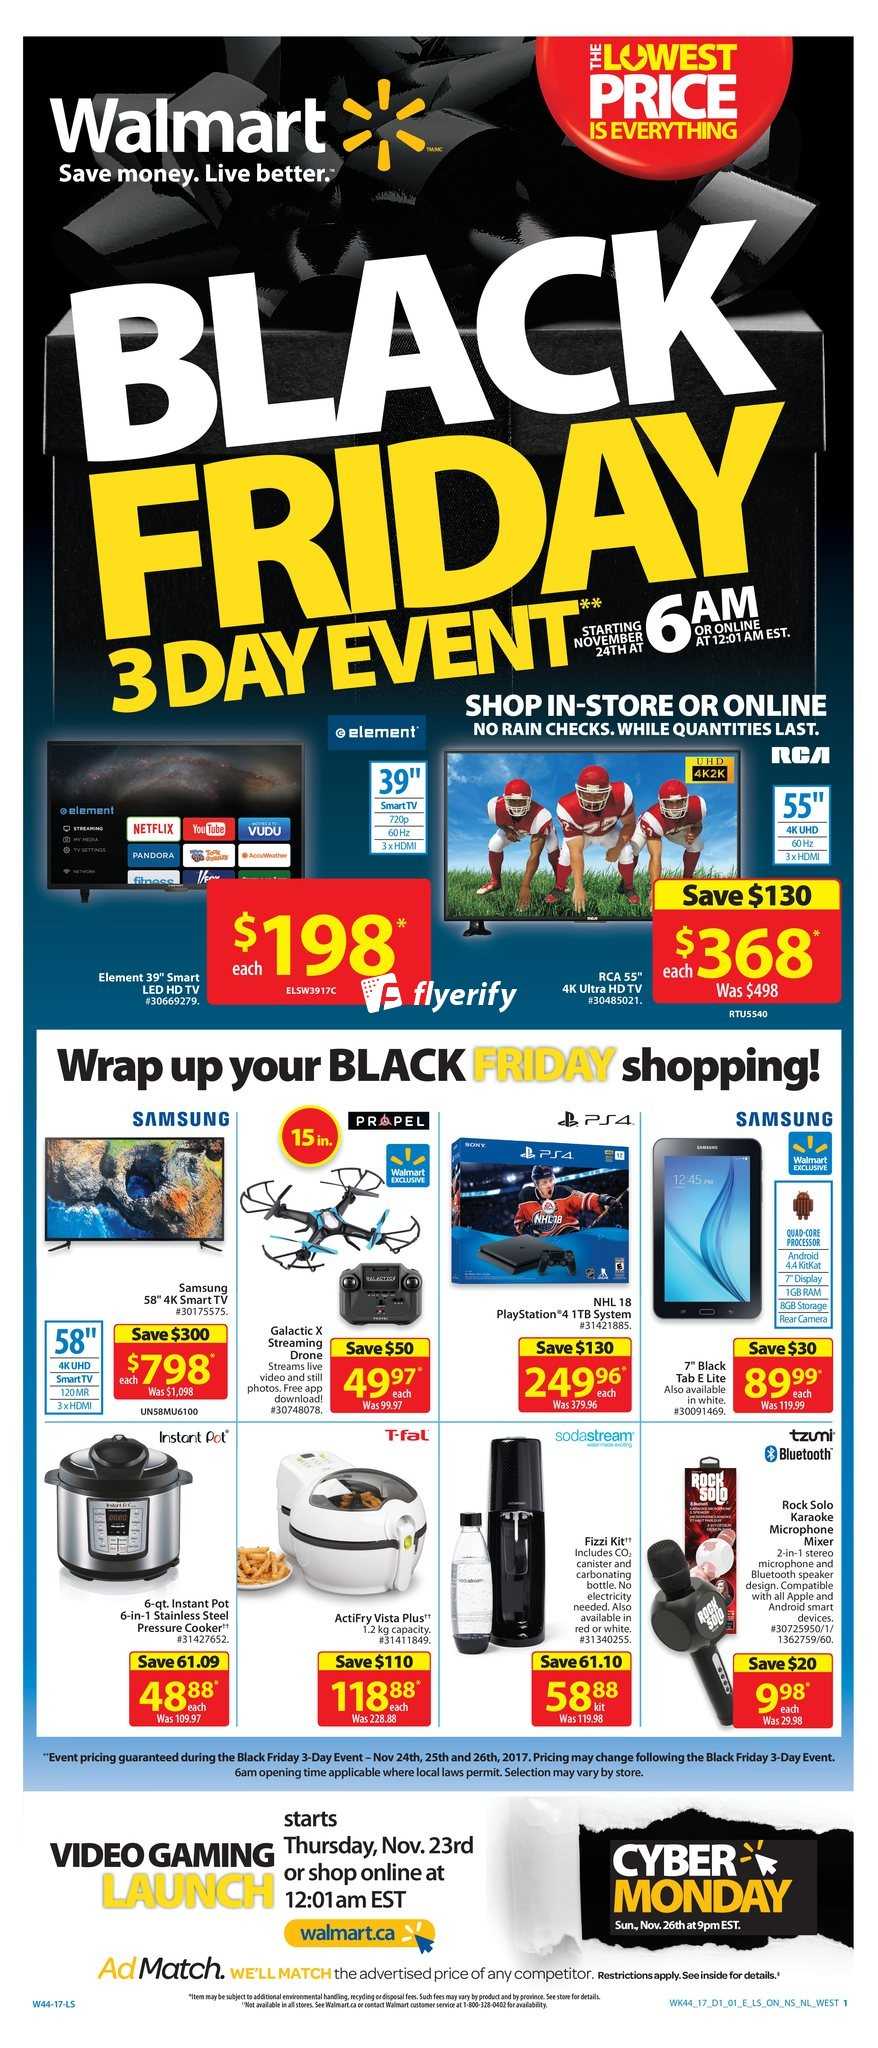 Black Friday 2019 Walmart Canada Flyer | semashow.com